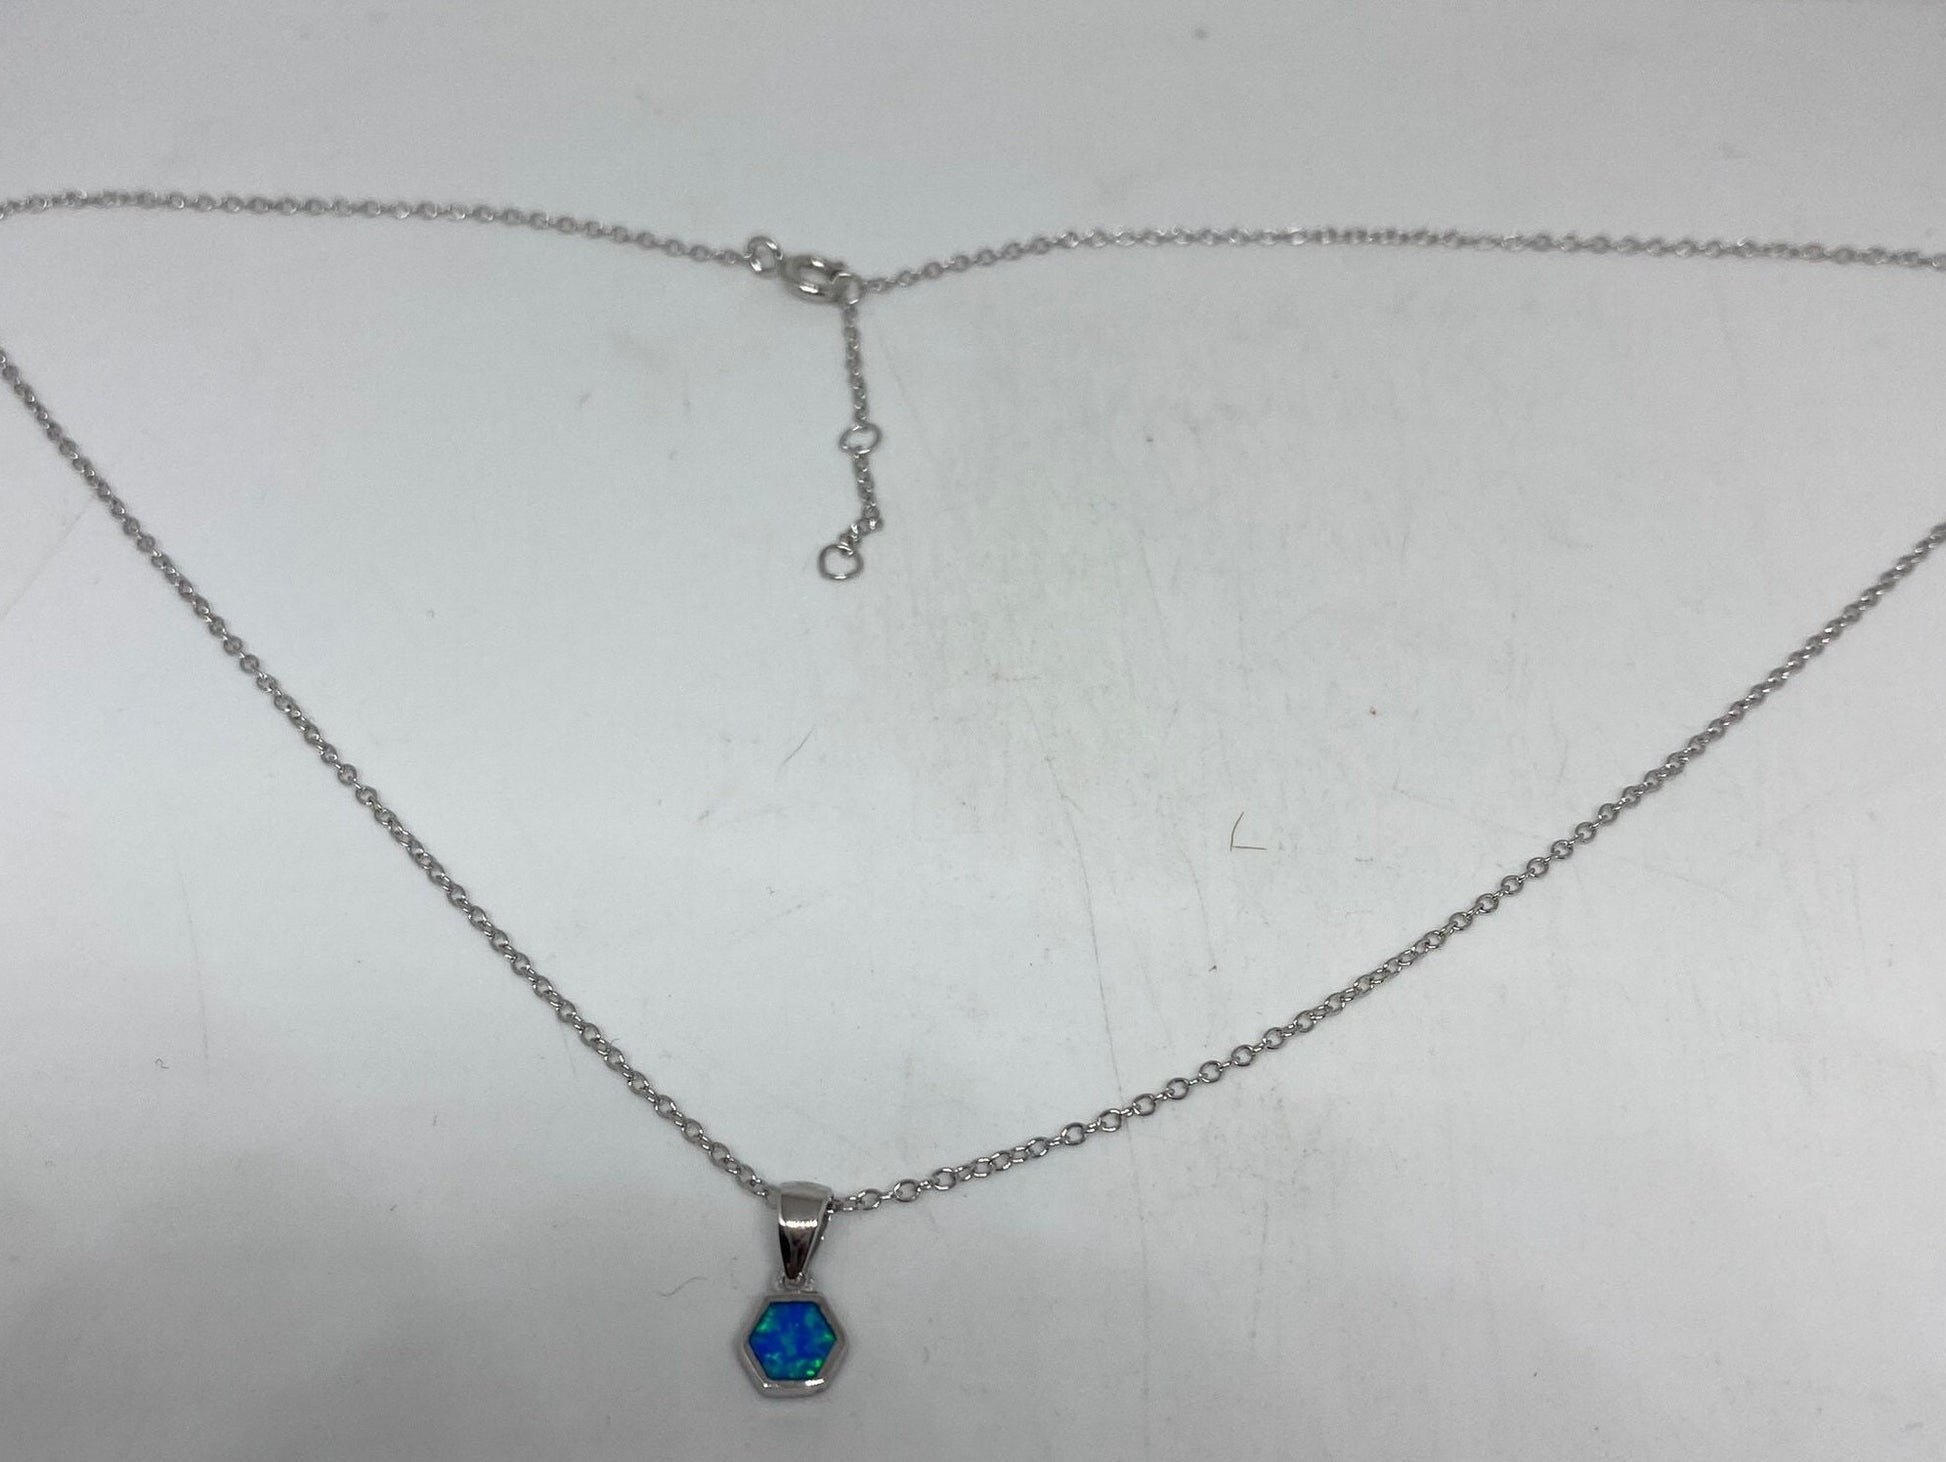 Vintage Fire Opal Choker 925 Sterling Silver Pendant Necklace